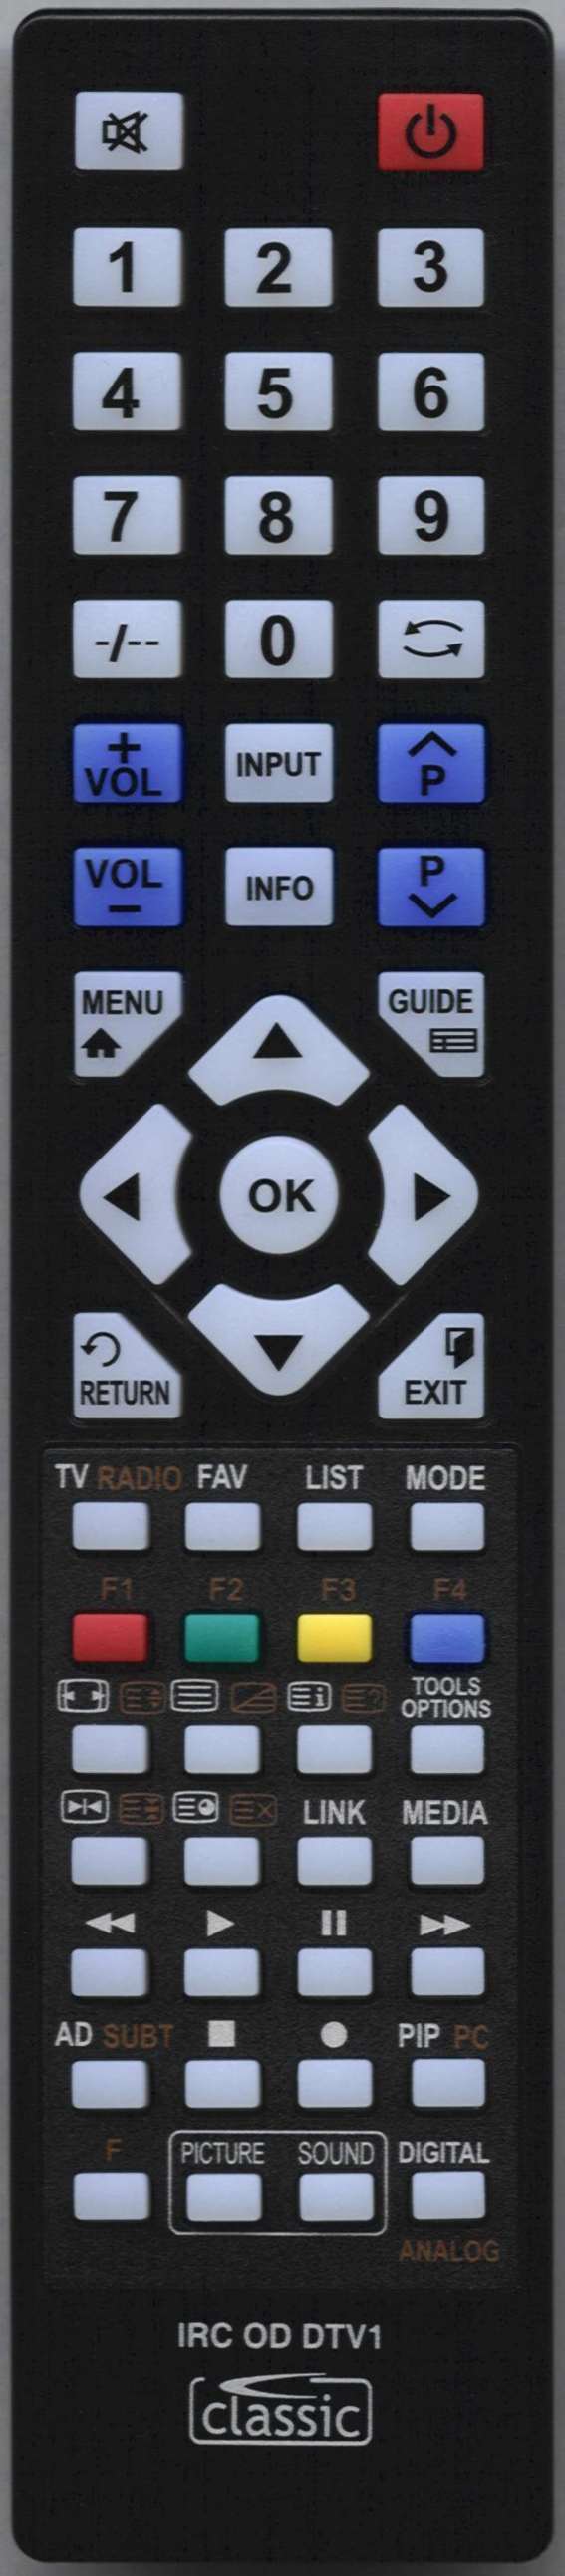 DIGITREX CFD-1571A Remote Control